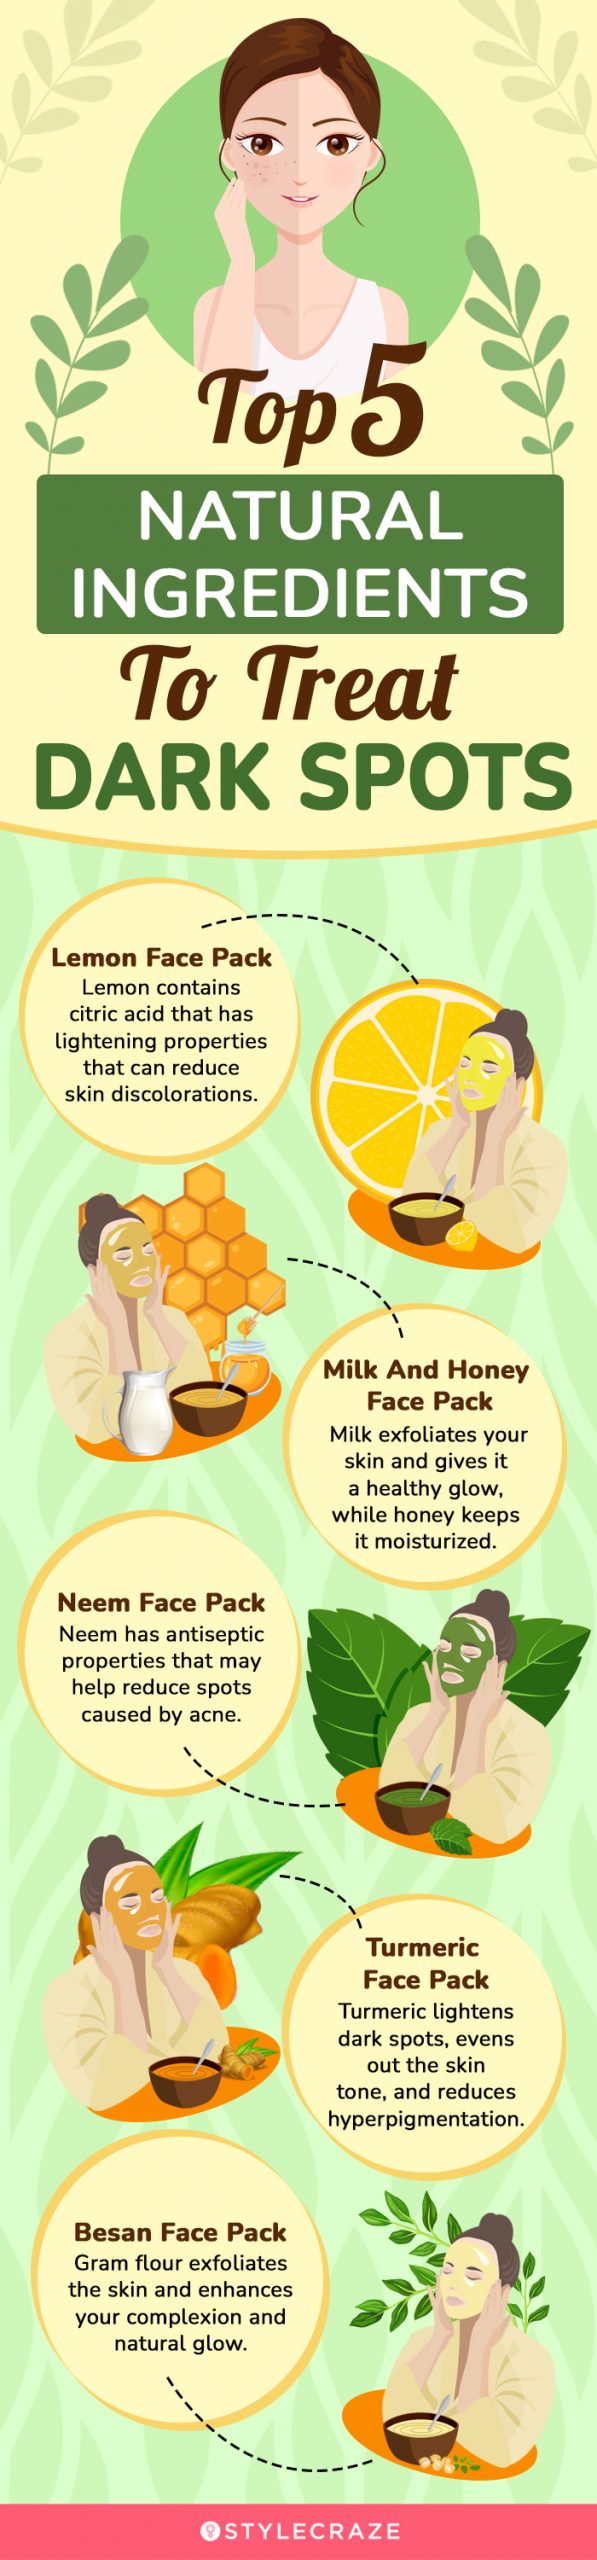 top 5 natural ingredients to treat dark spots [infographic]